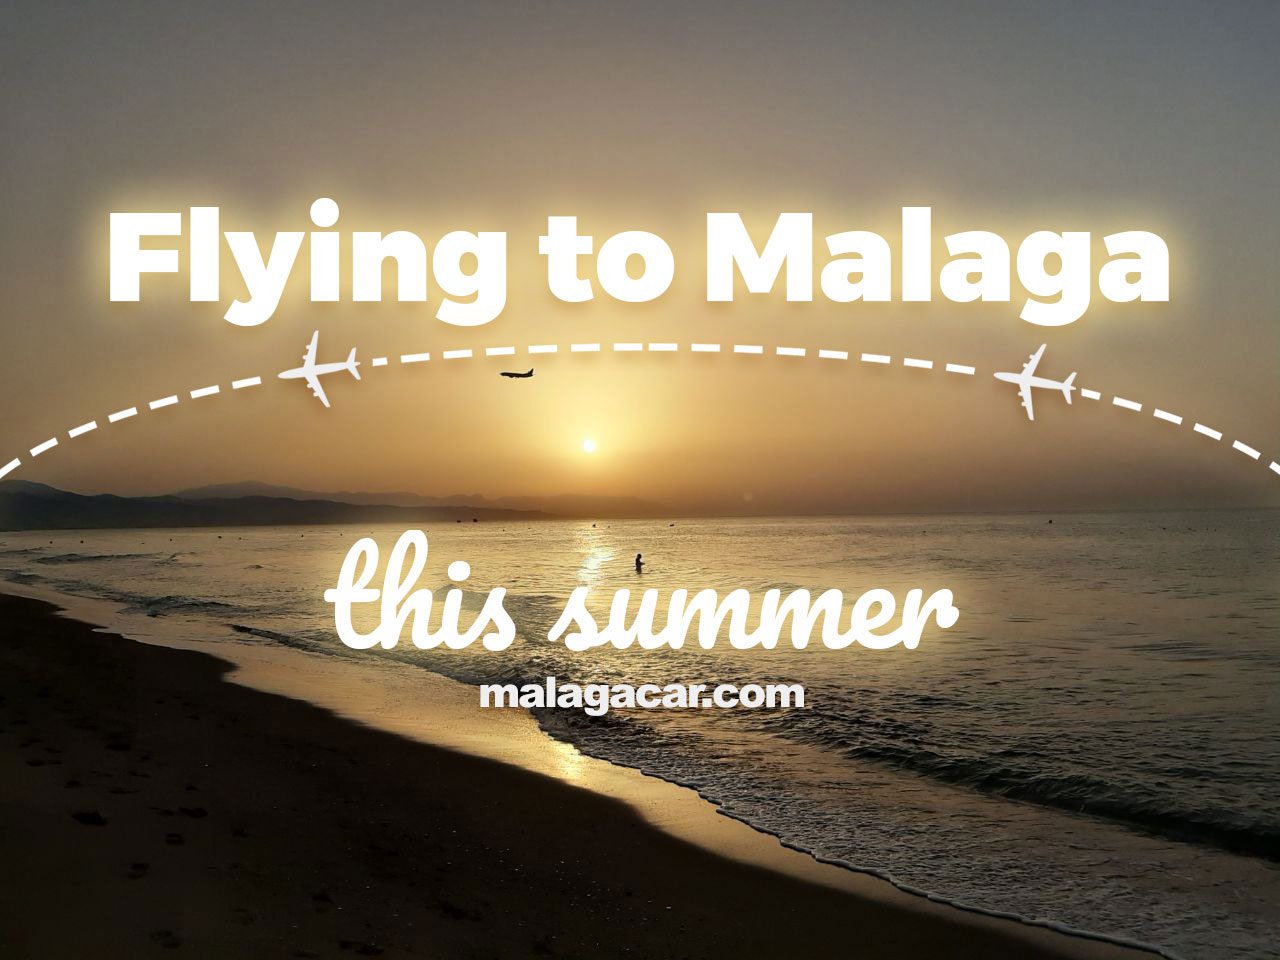 Flights to Malaga